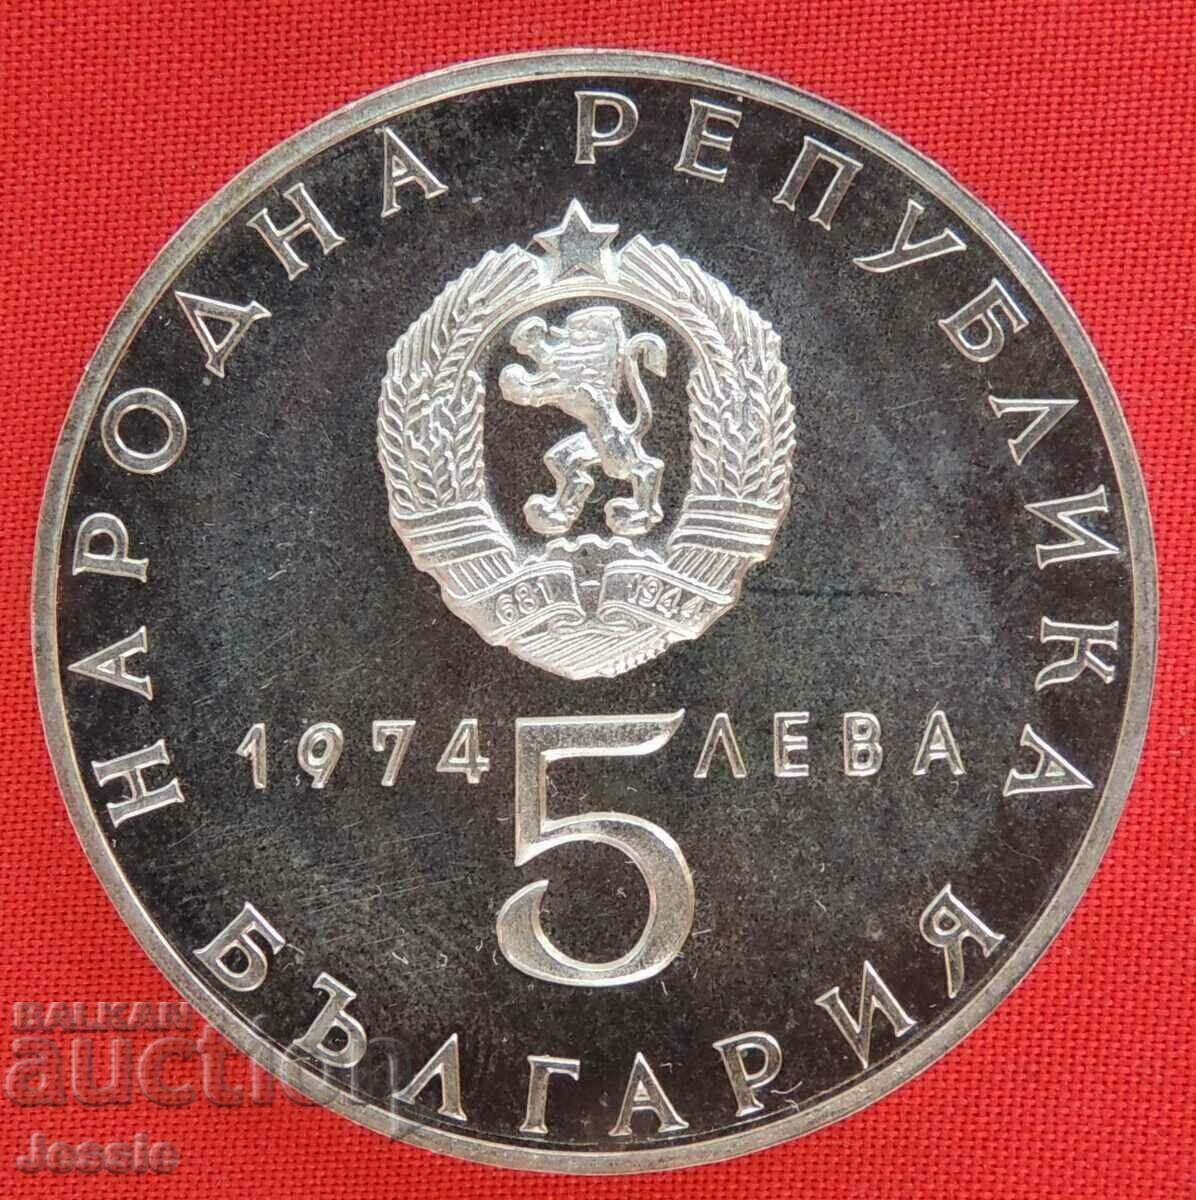 5 leva 1974 30 years. social revolution silver MINT